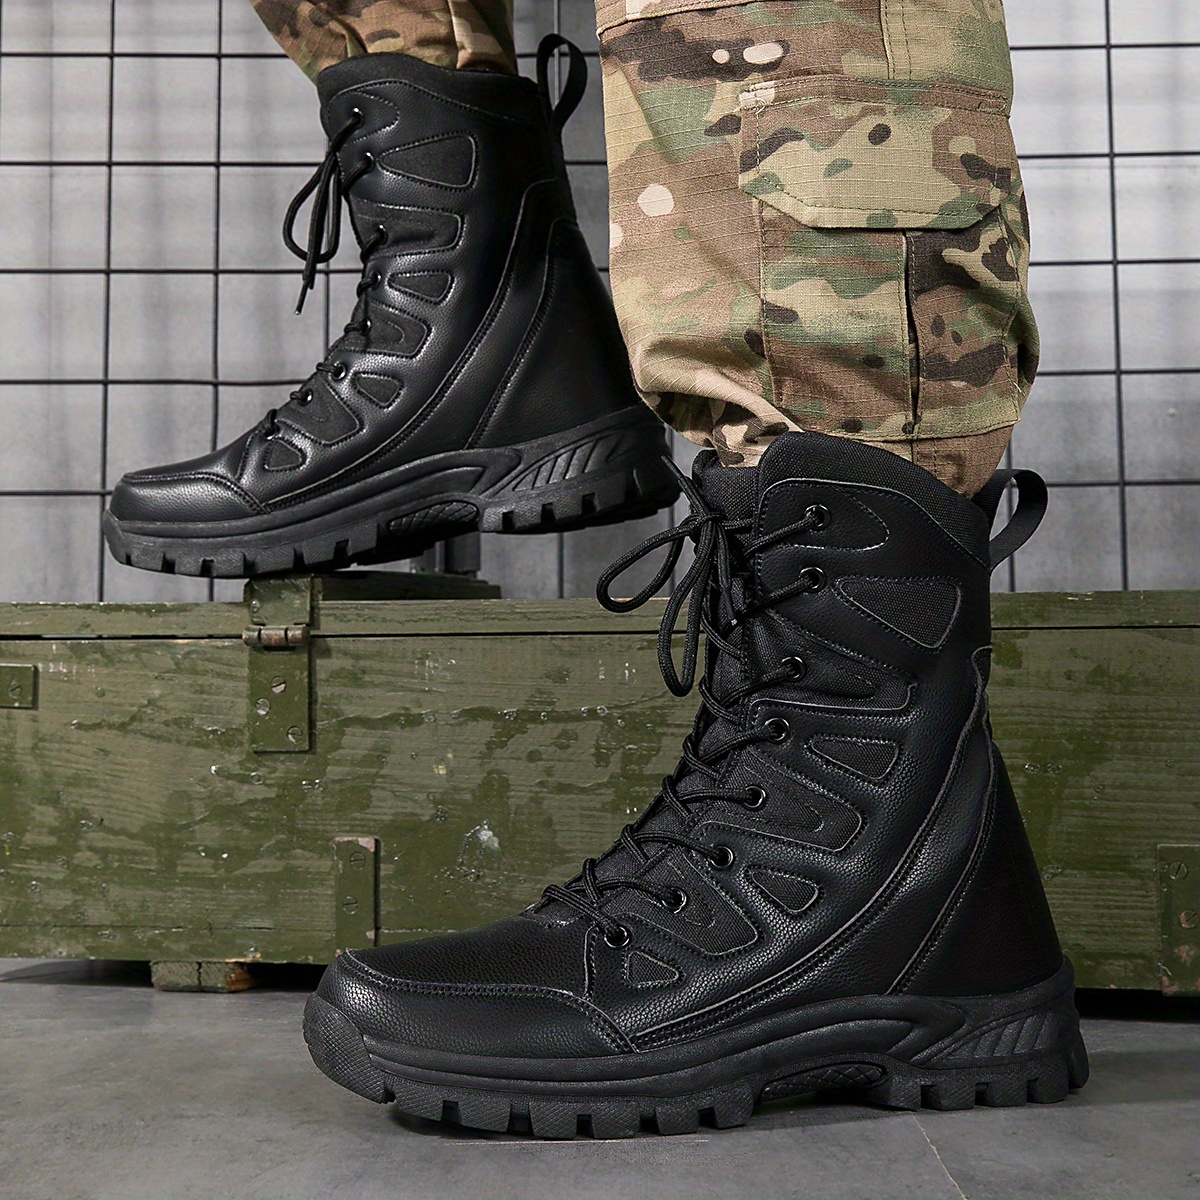 Zapatos Botas Para Trabajar De Hombre Casuales Altas Militares Calzado  Masculino